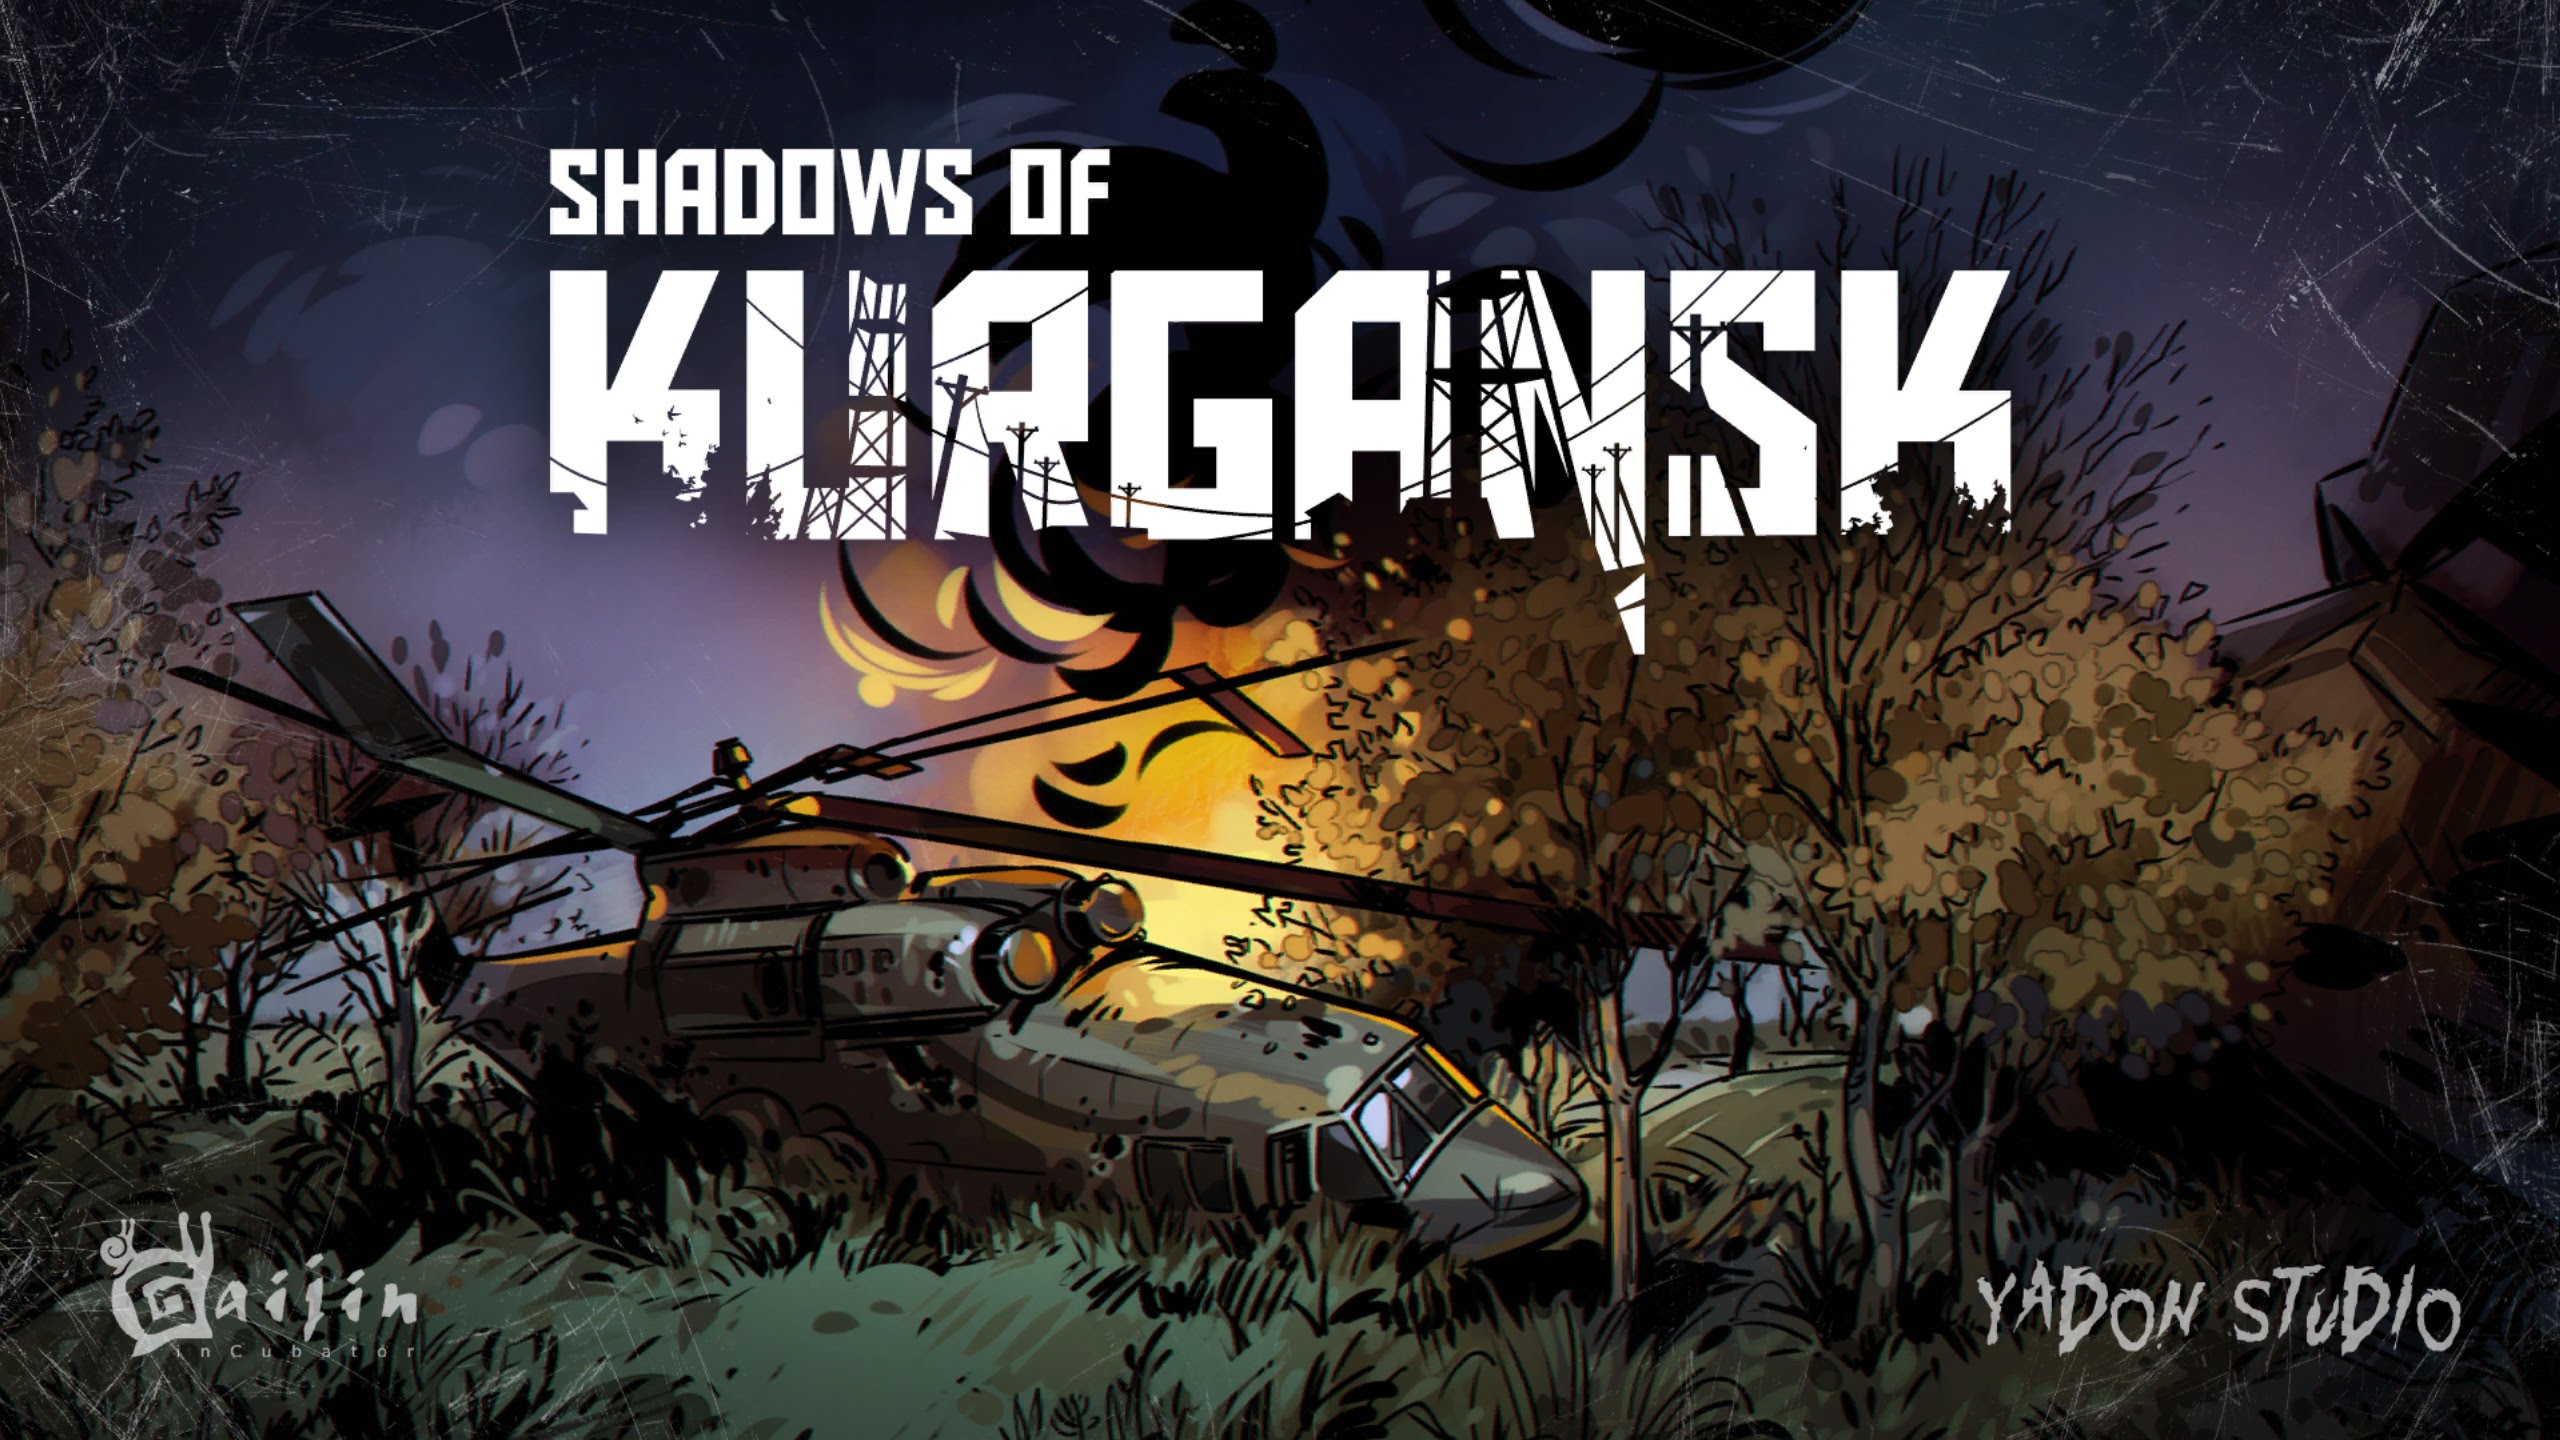 Shadows of Kurgansk